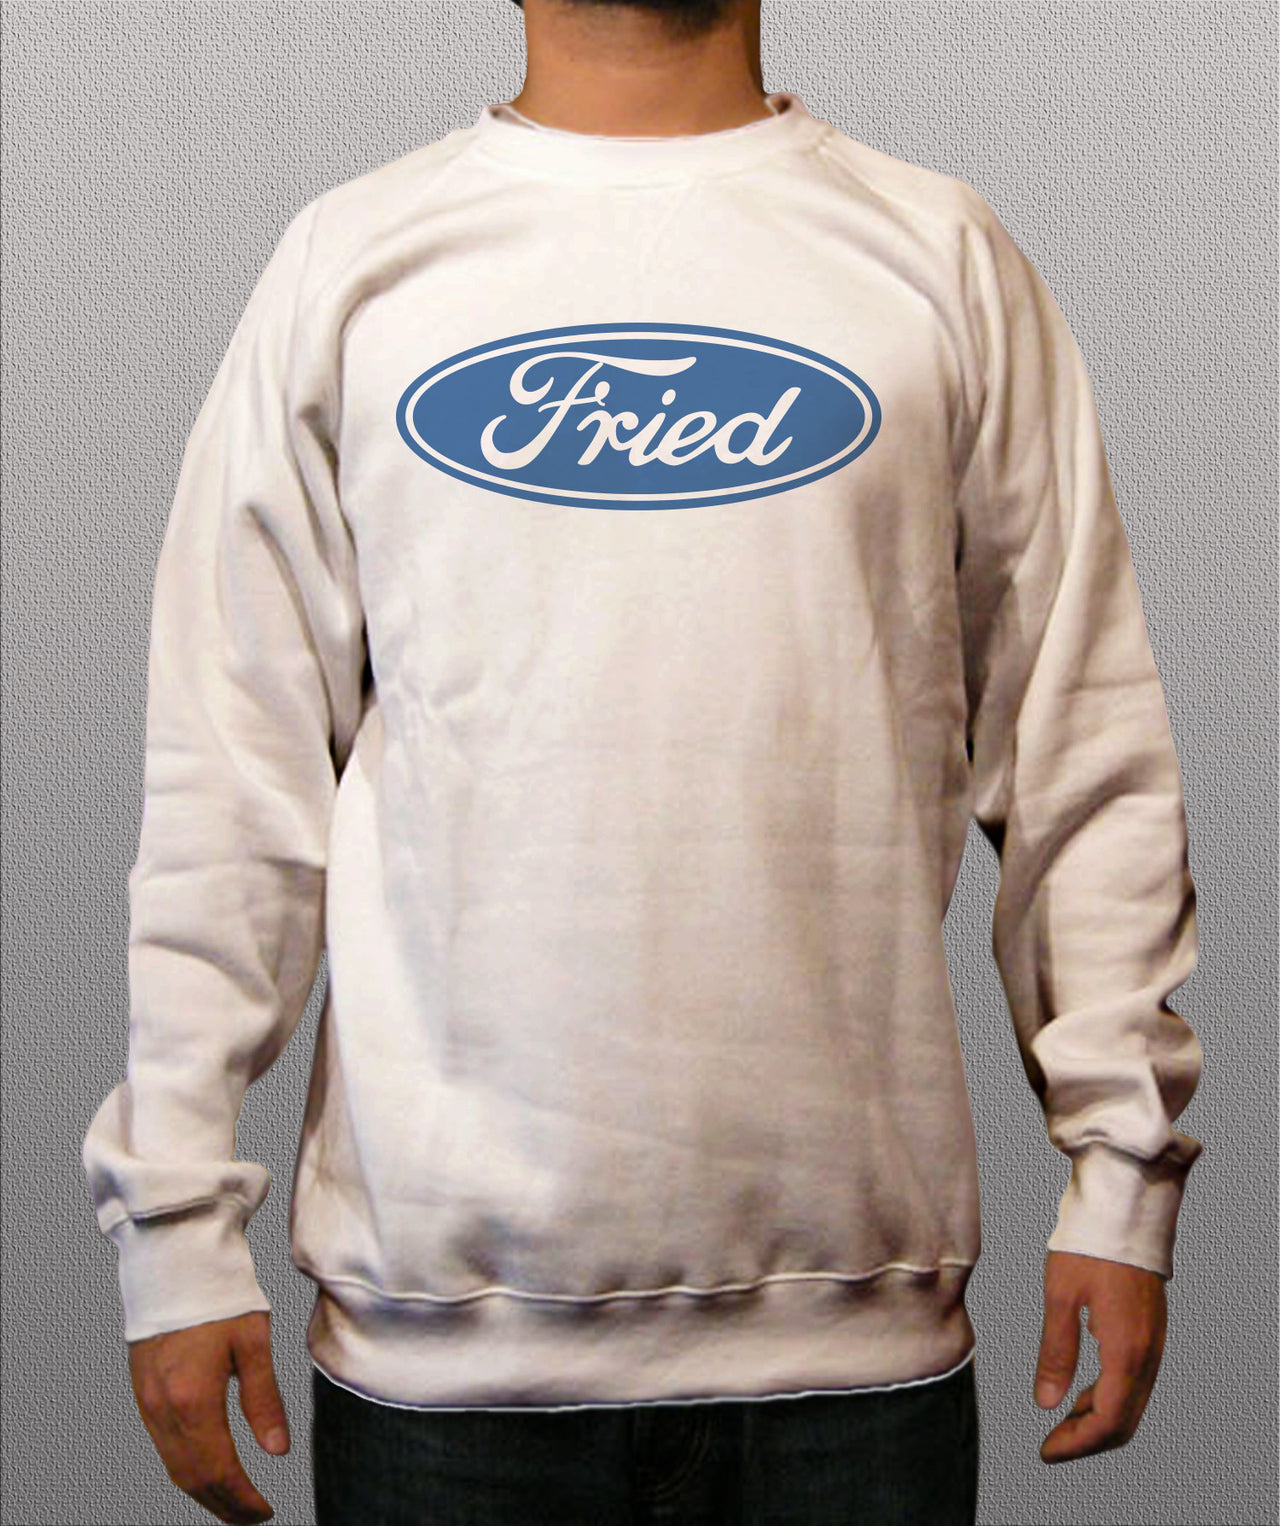 Fried White Crewneck Sweatshirts - TshirtNow.net - 1